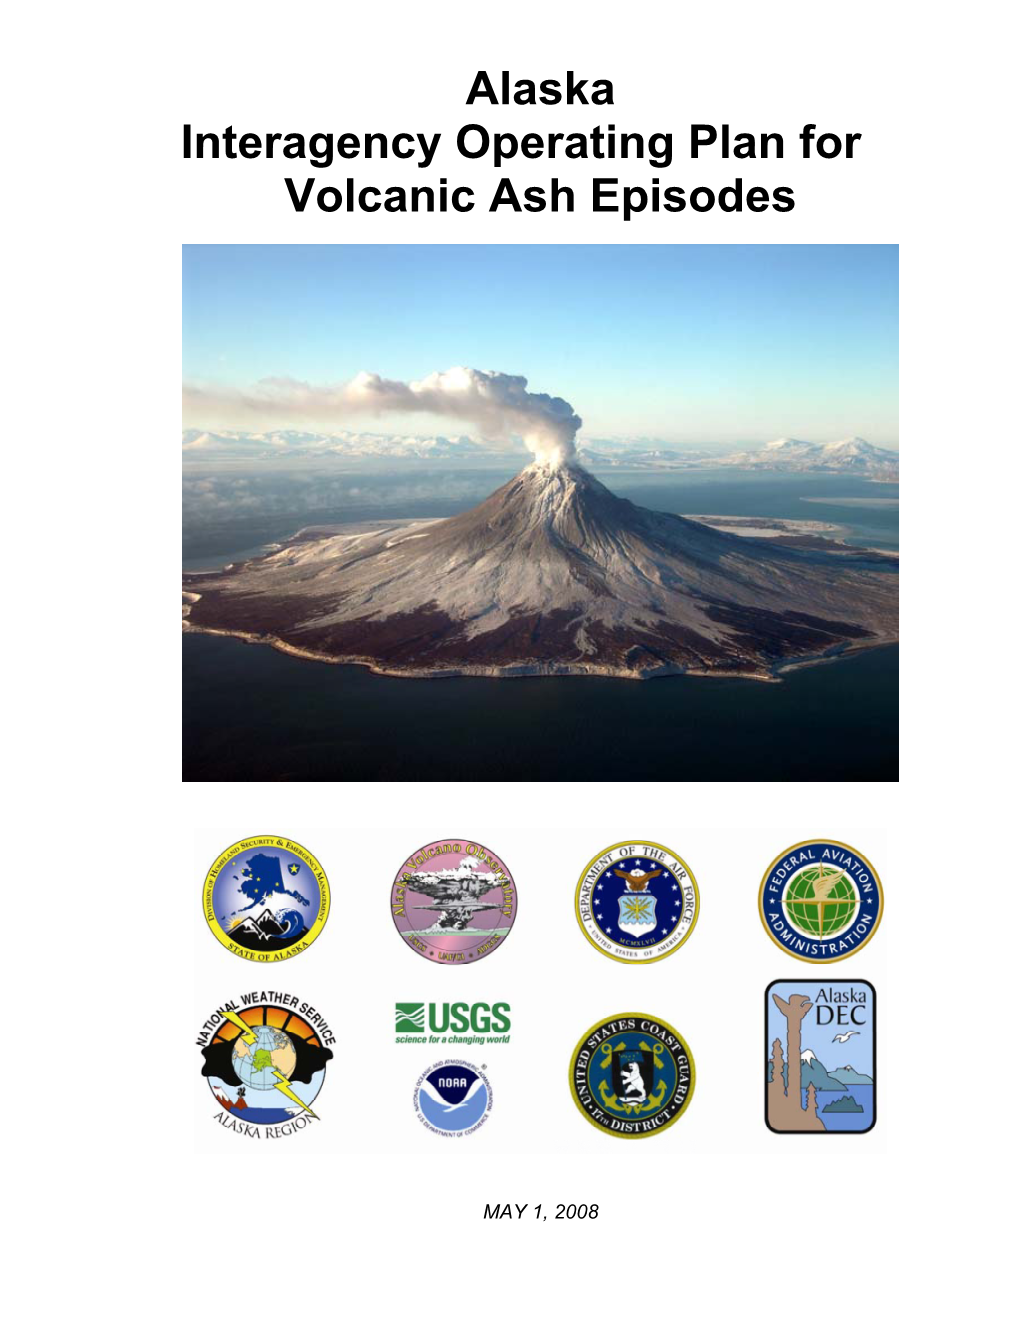 Alaska Interagency Operating Plan for Volcanic Ash Episodes